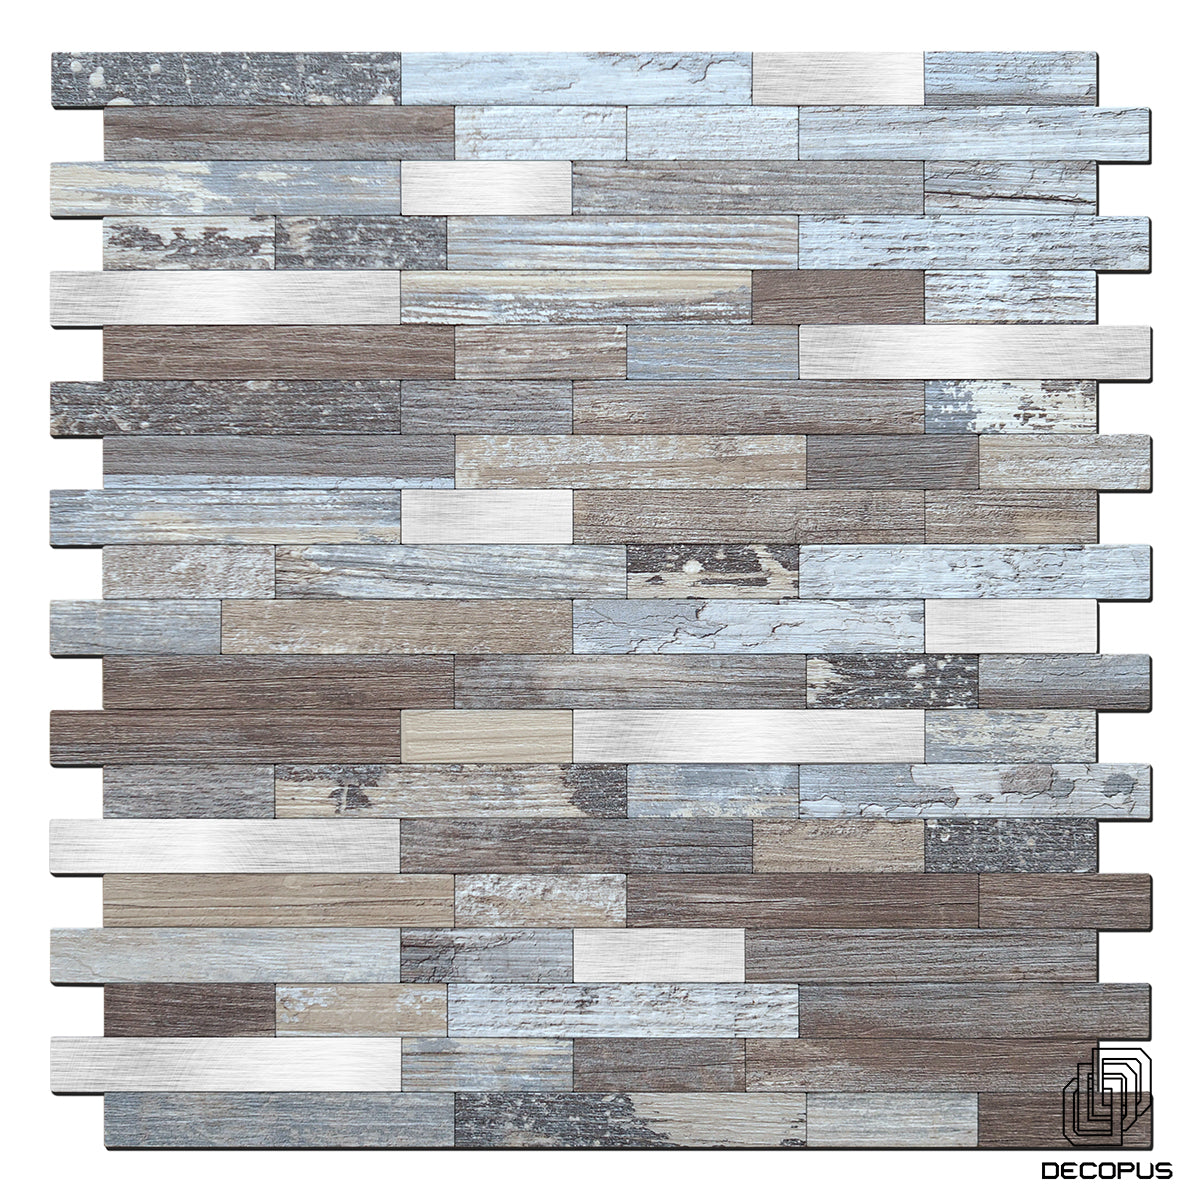 Decopus Metal Tile Peel and Stick Backsplash (Long Strip Shape in Reclaimed Wood Light Color 5pc_Pack)